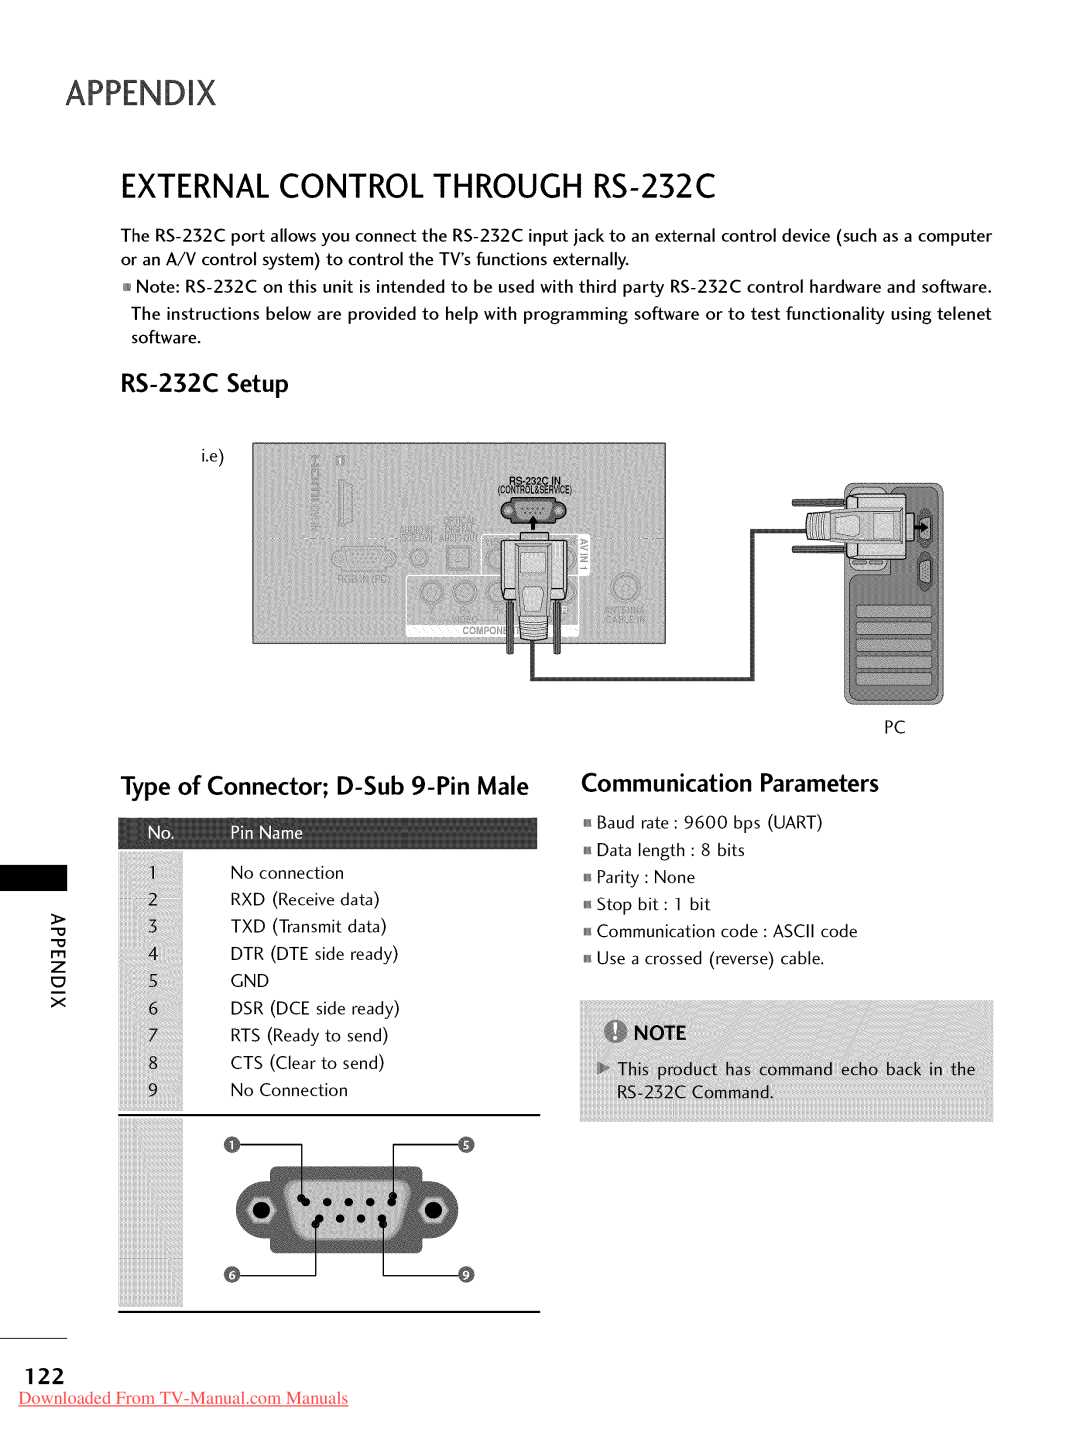 LG Electronics 42LD520 EXTERNAL CONTROL THROUGH RS-232C, RS-232C Setup, @@ 122, Downloaded From TV-Manual.com Manuals 